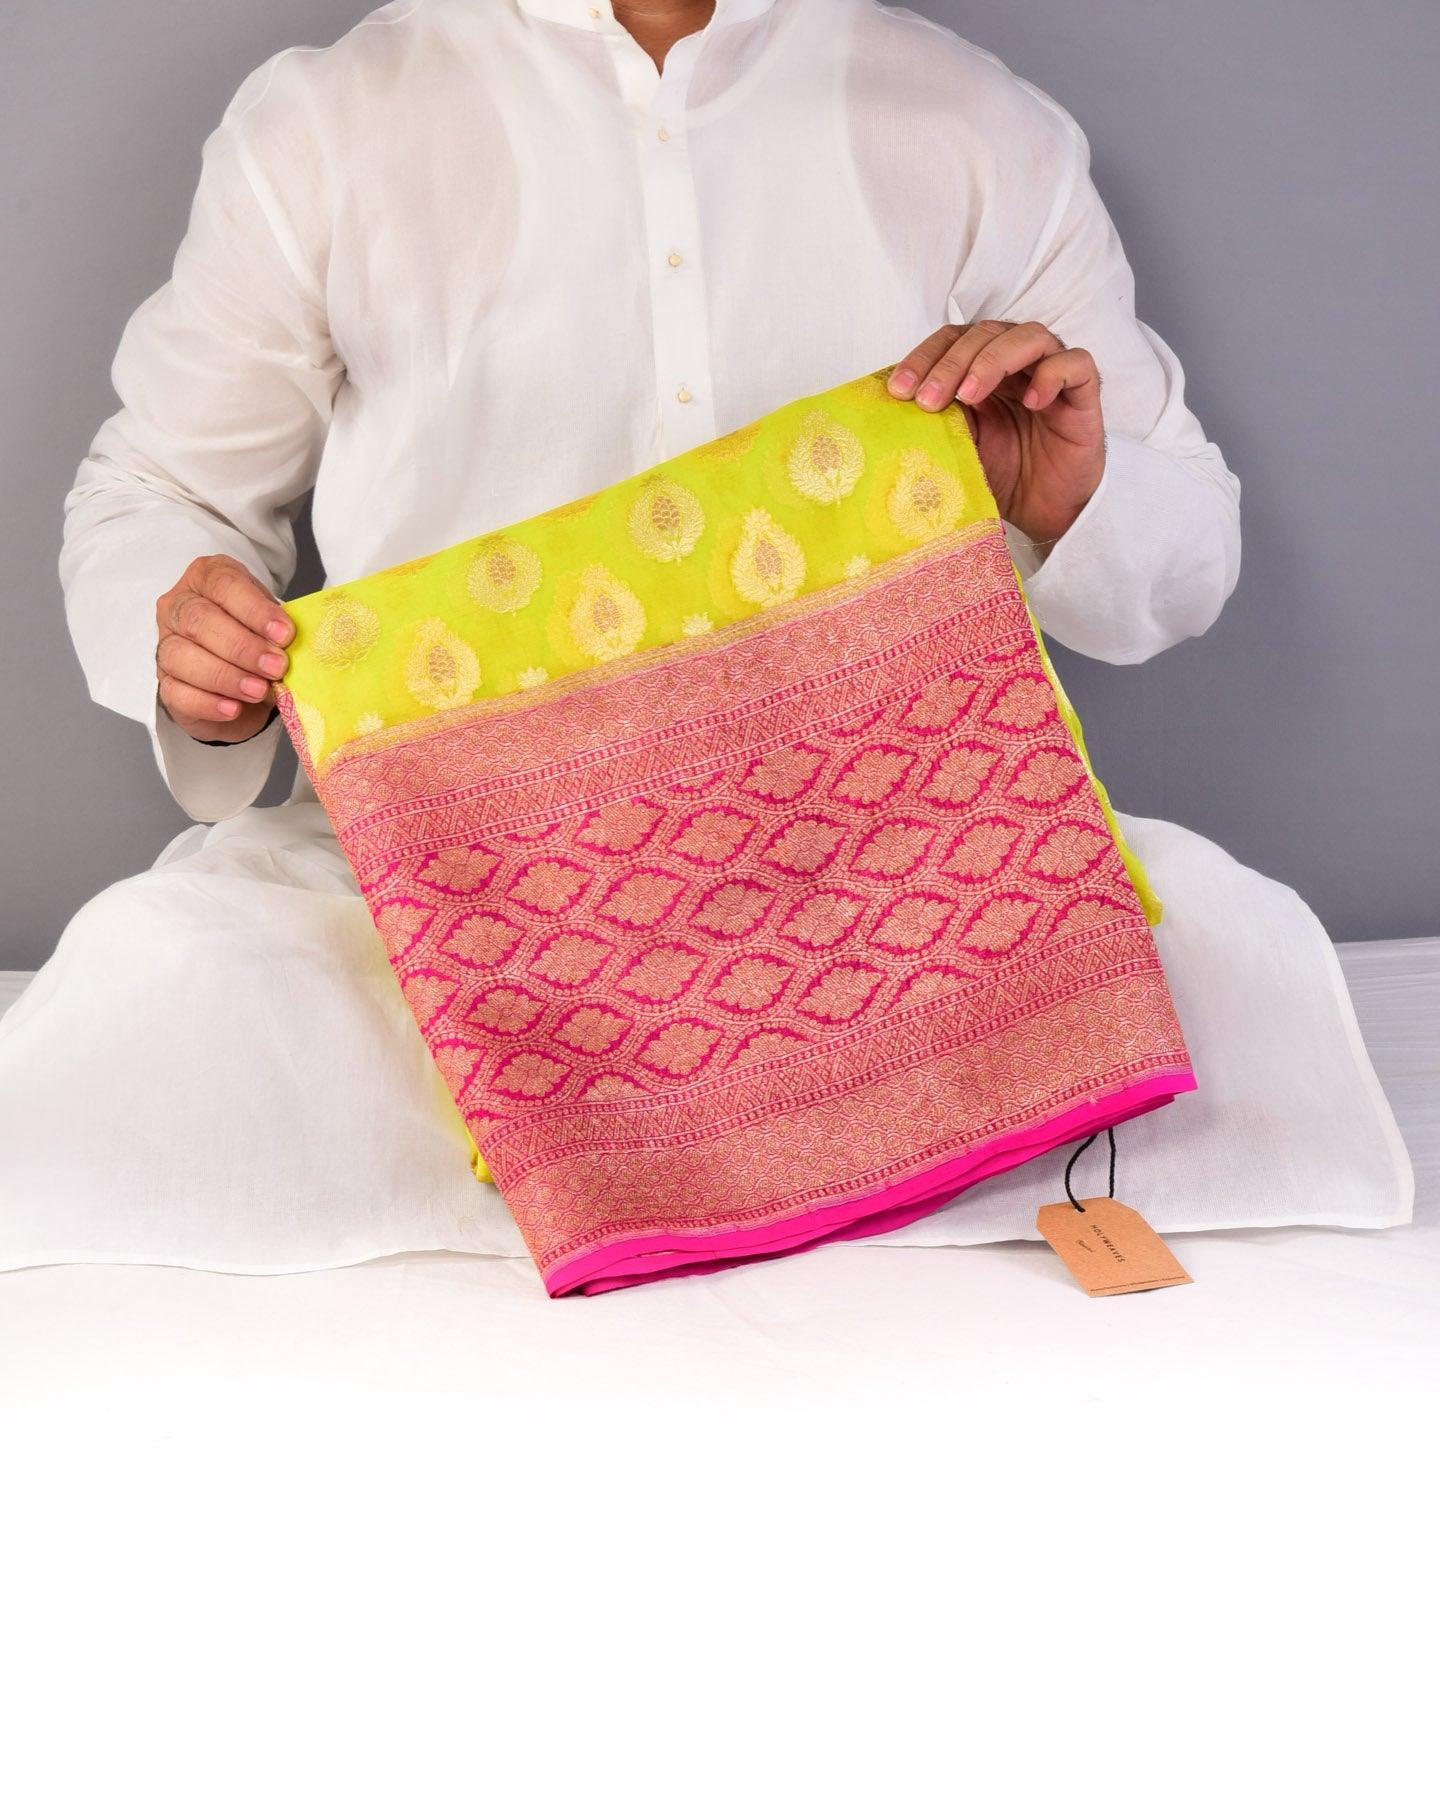 Neon Green Banarasi Overdyed Alfi Buti Cutwork Brocade Handwoven Kora Silk Saree - By HolyWeaves, Benares